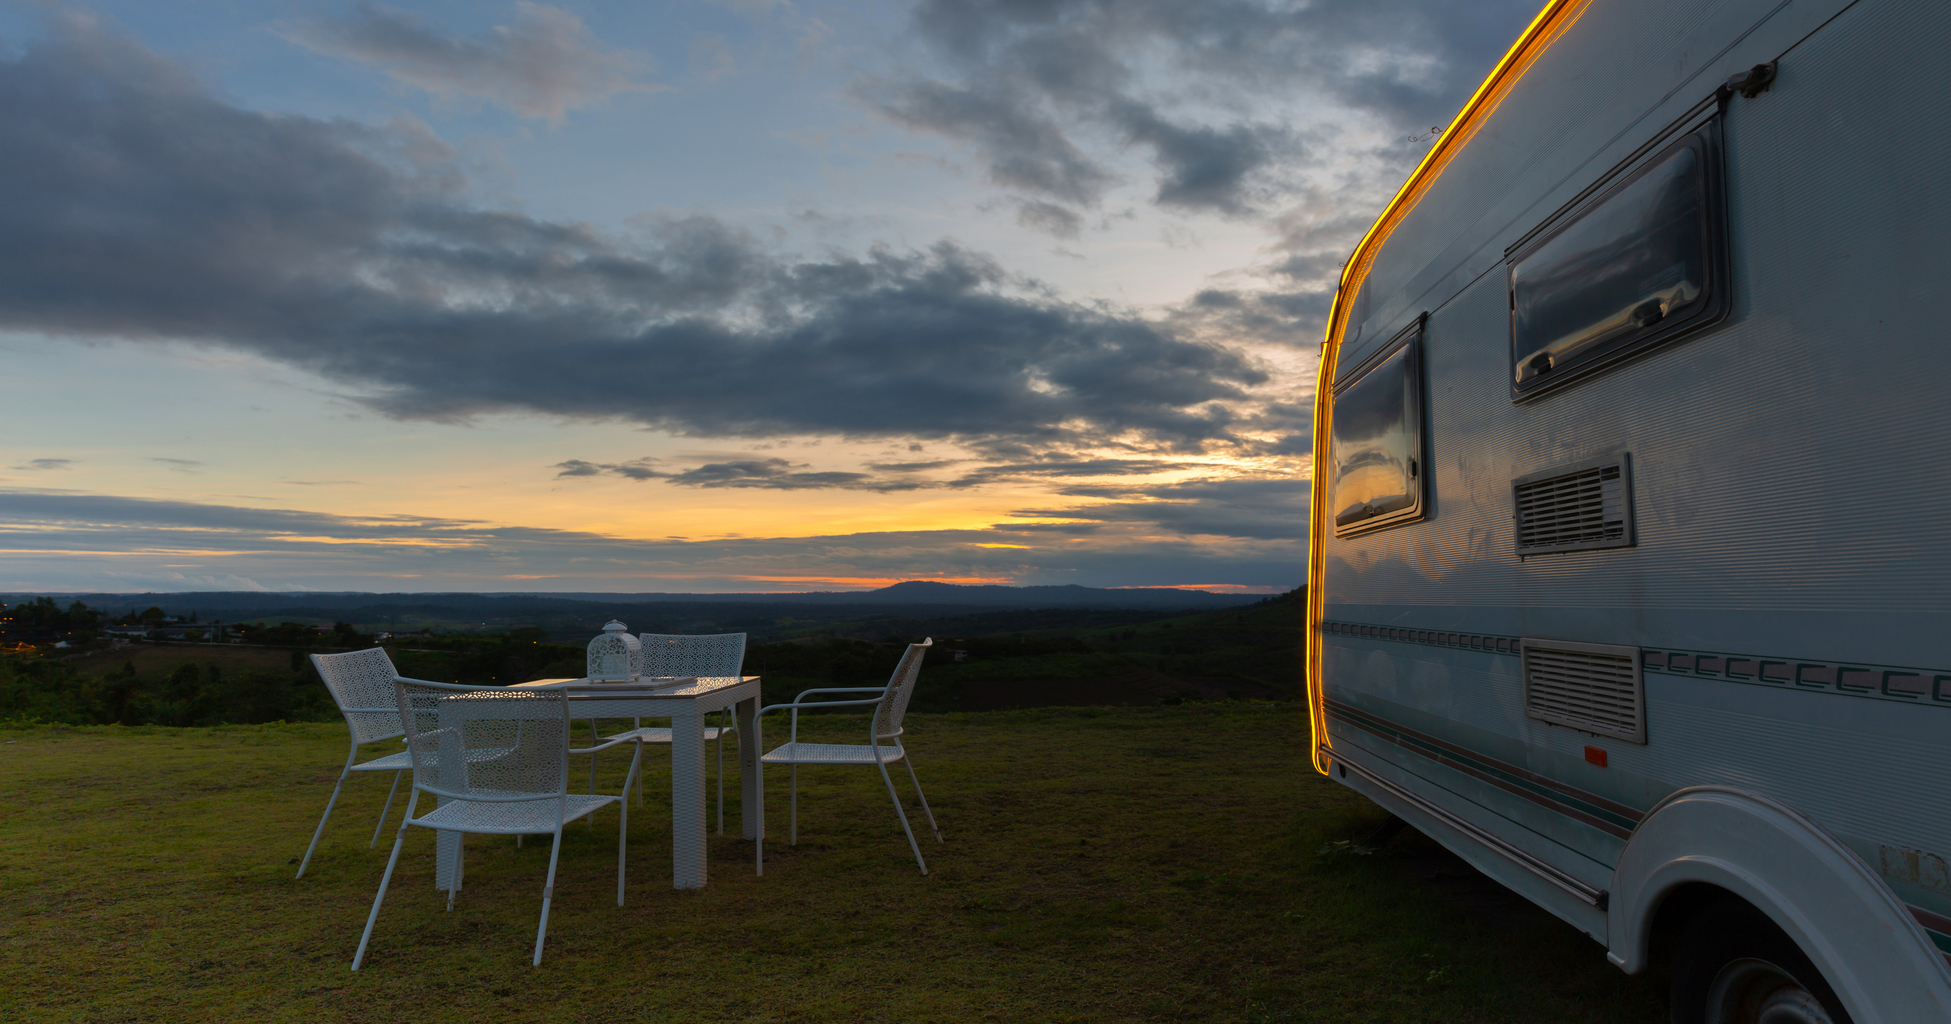 campsite-with-caravans-at-dusk-time